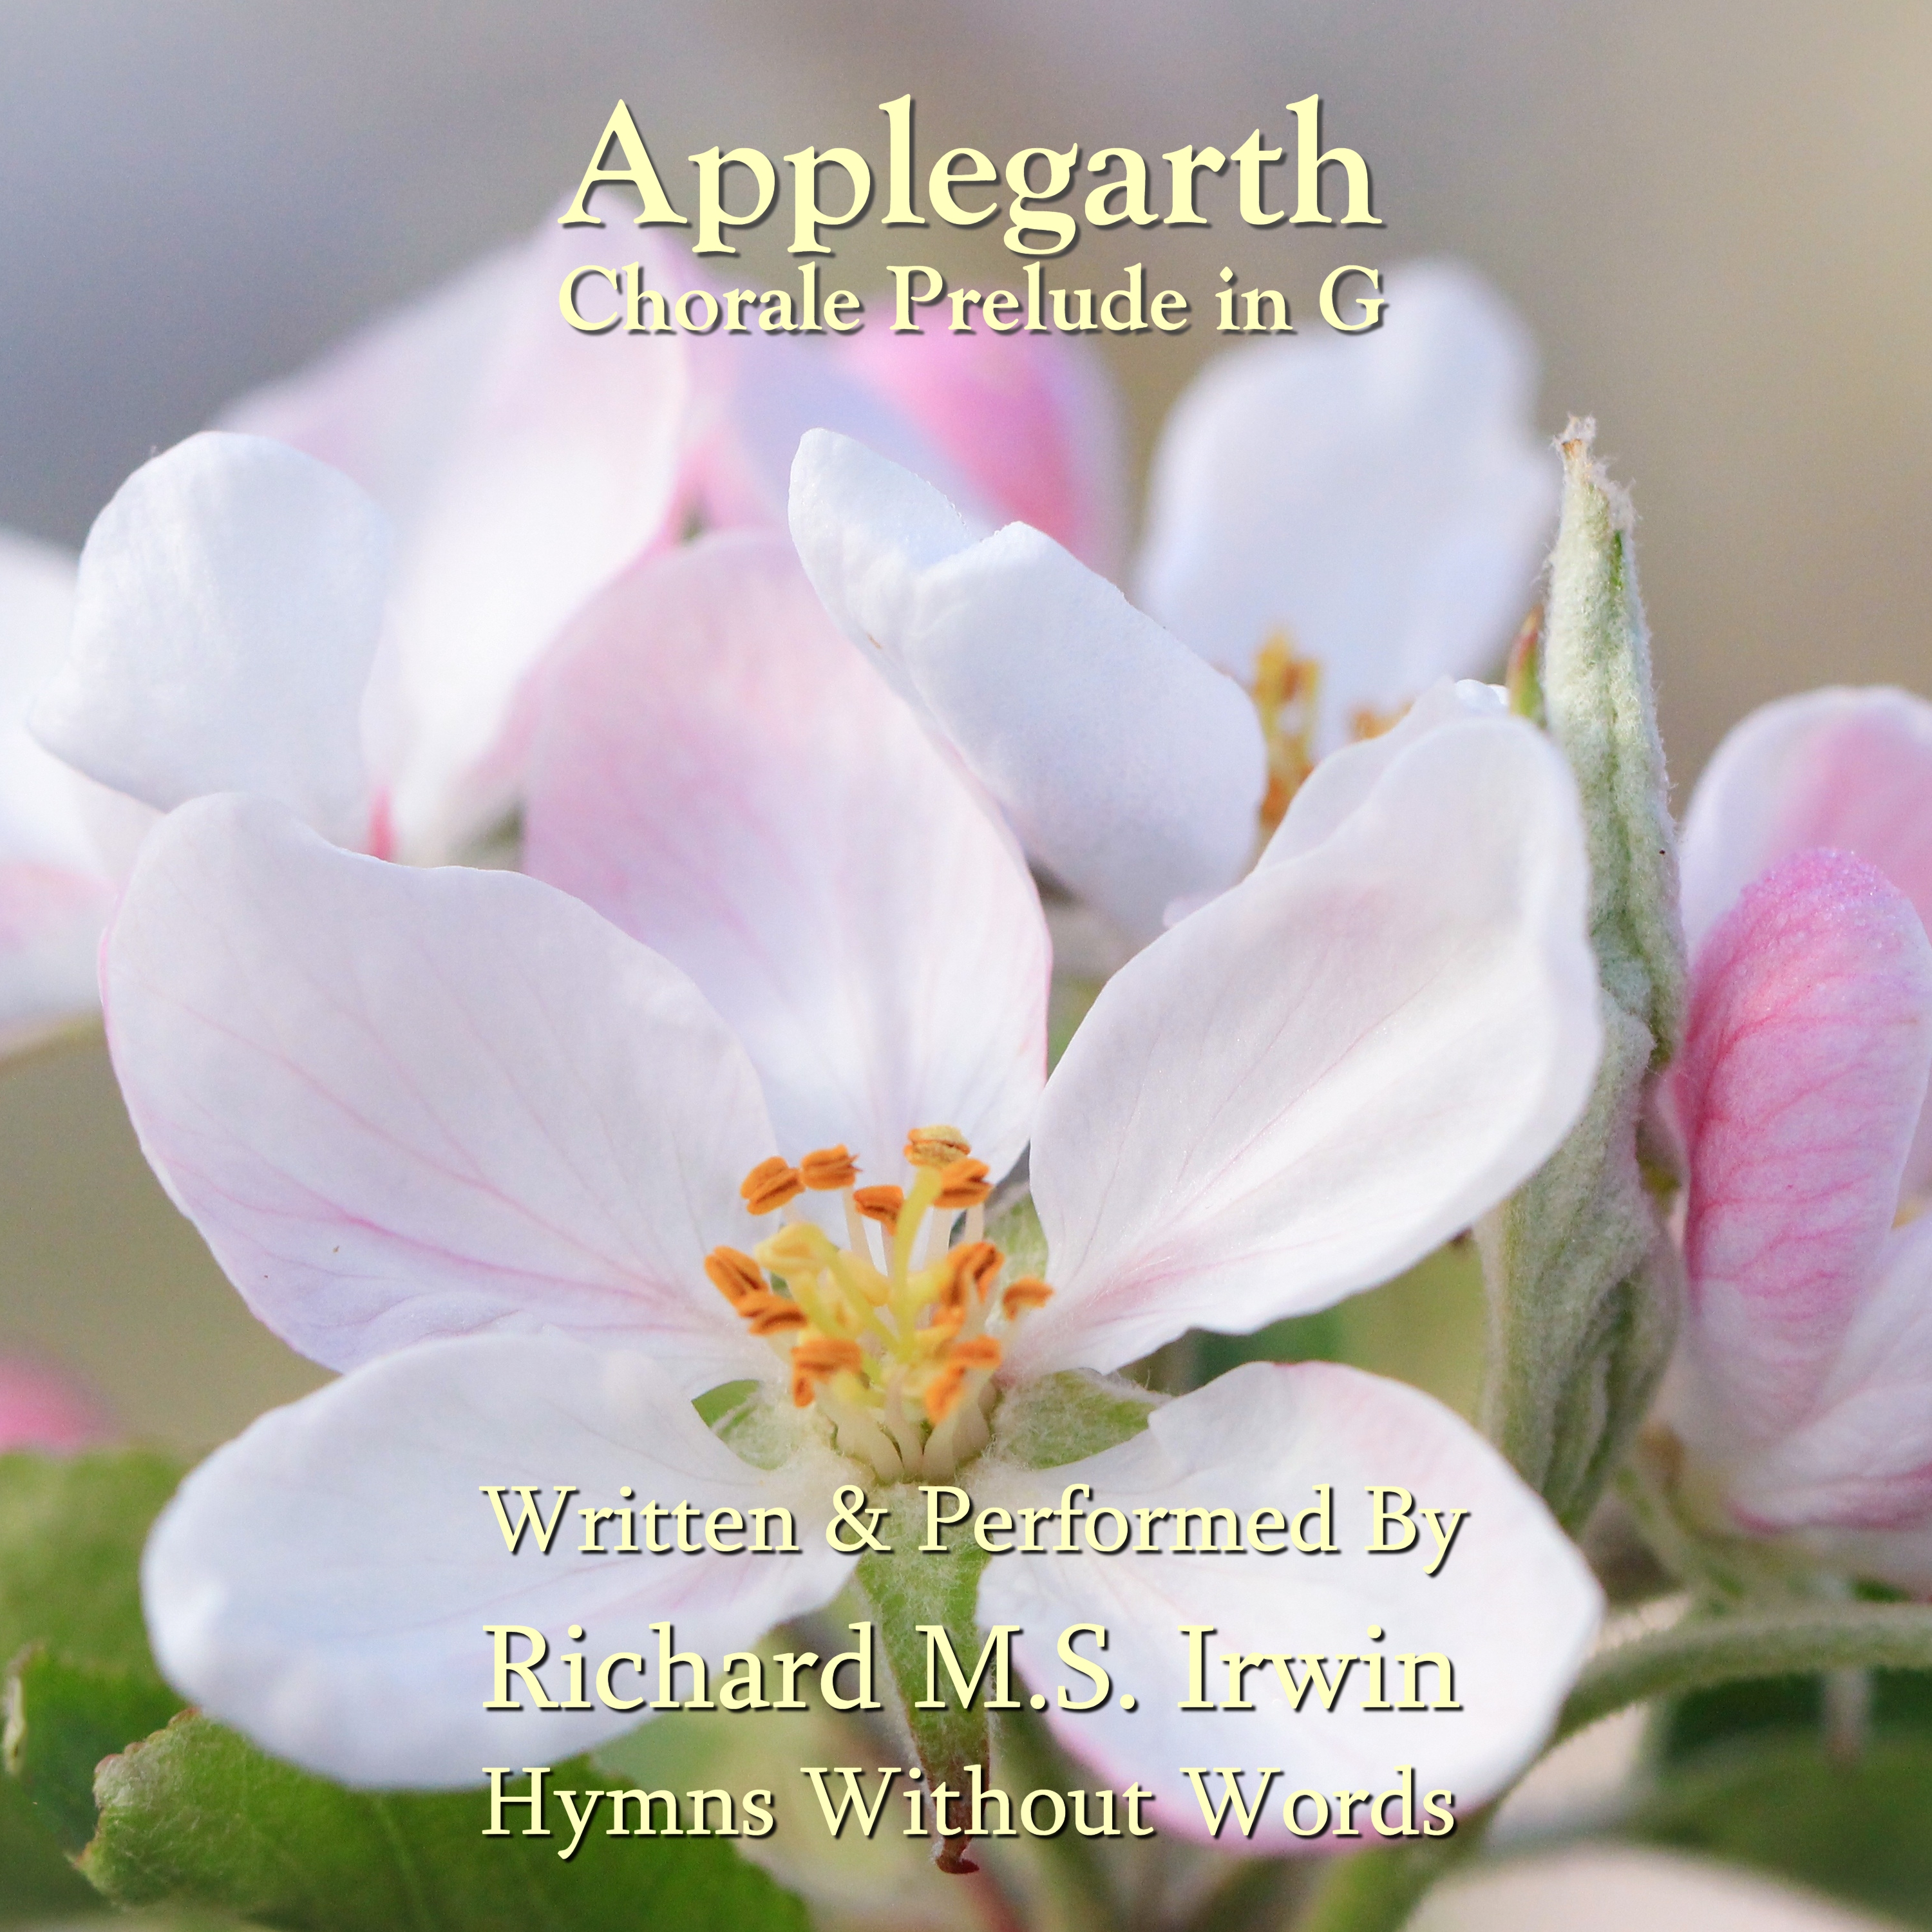 Applegarth Chorale Prelude #1 In G For Organ